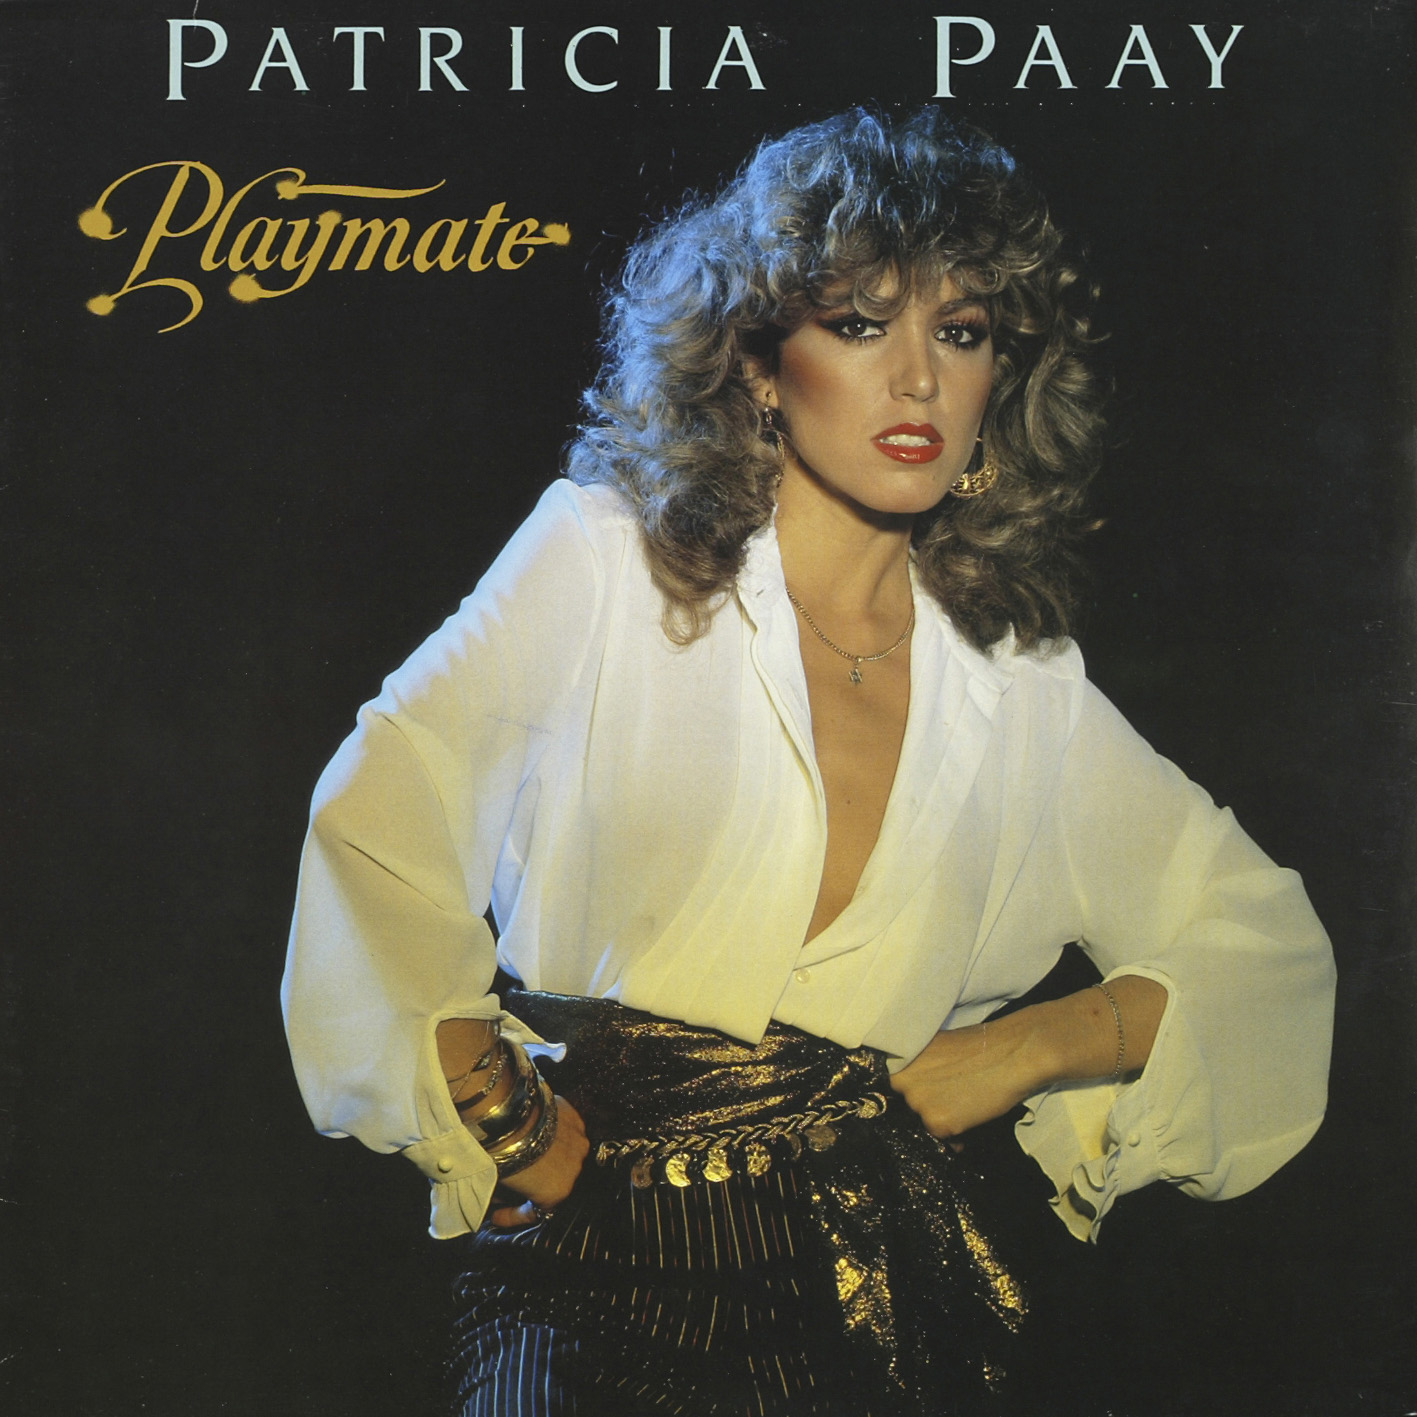 Patricia paay dutch